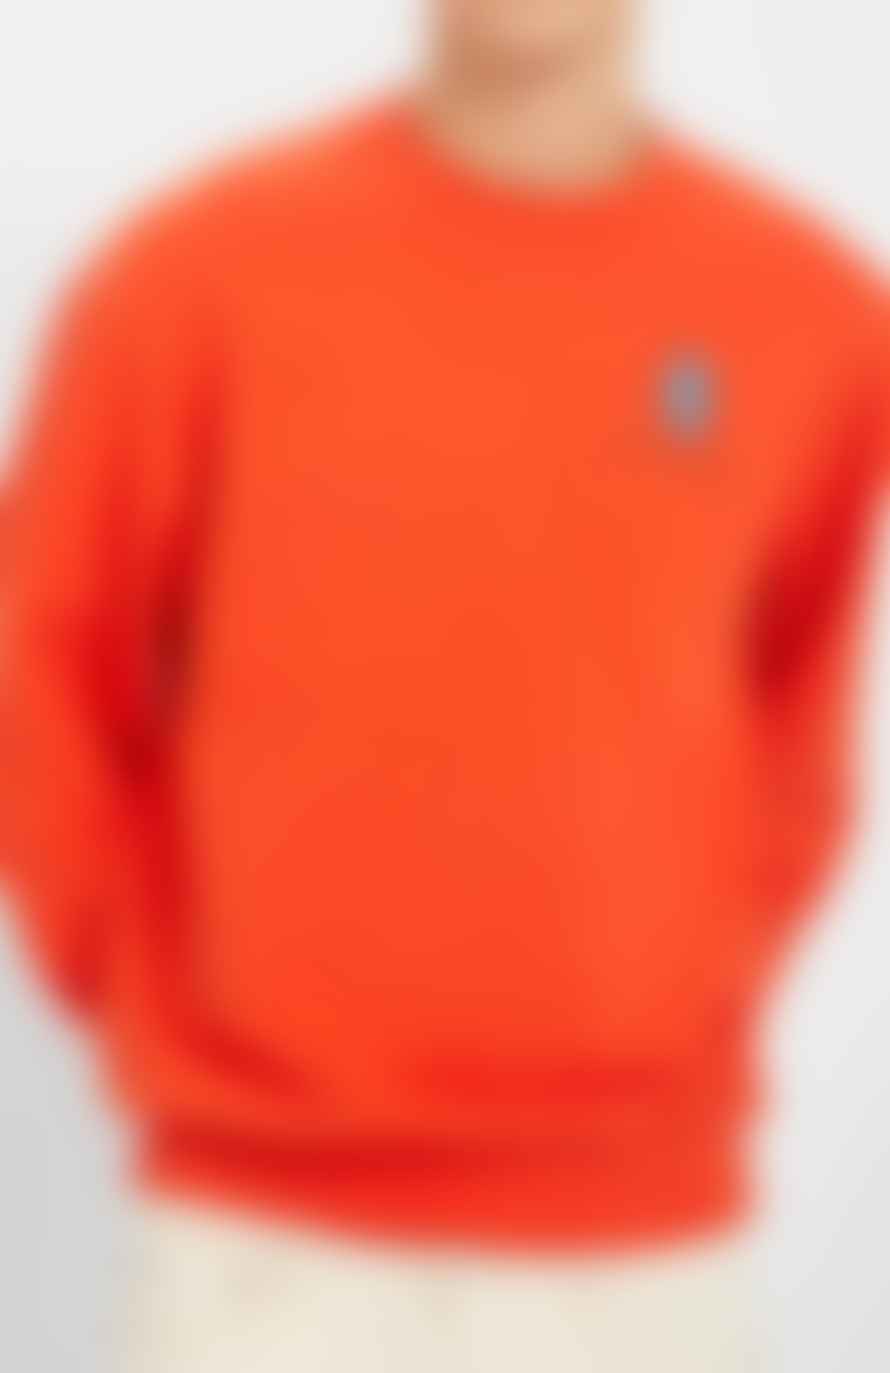 Loreak Red Detail Sweatshirt